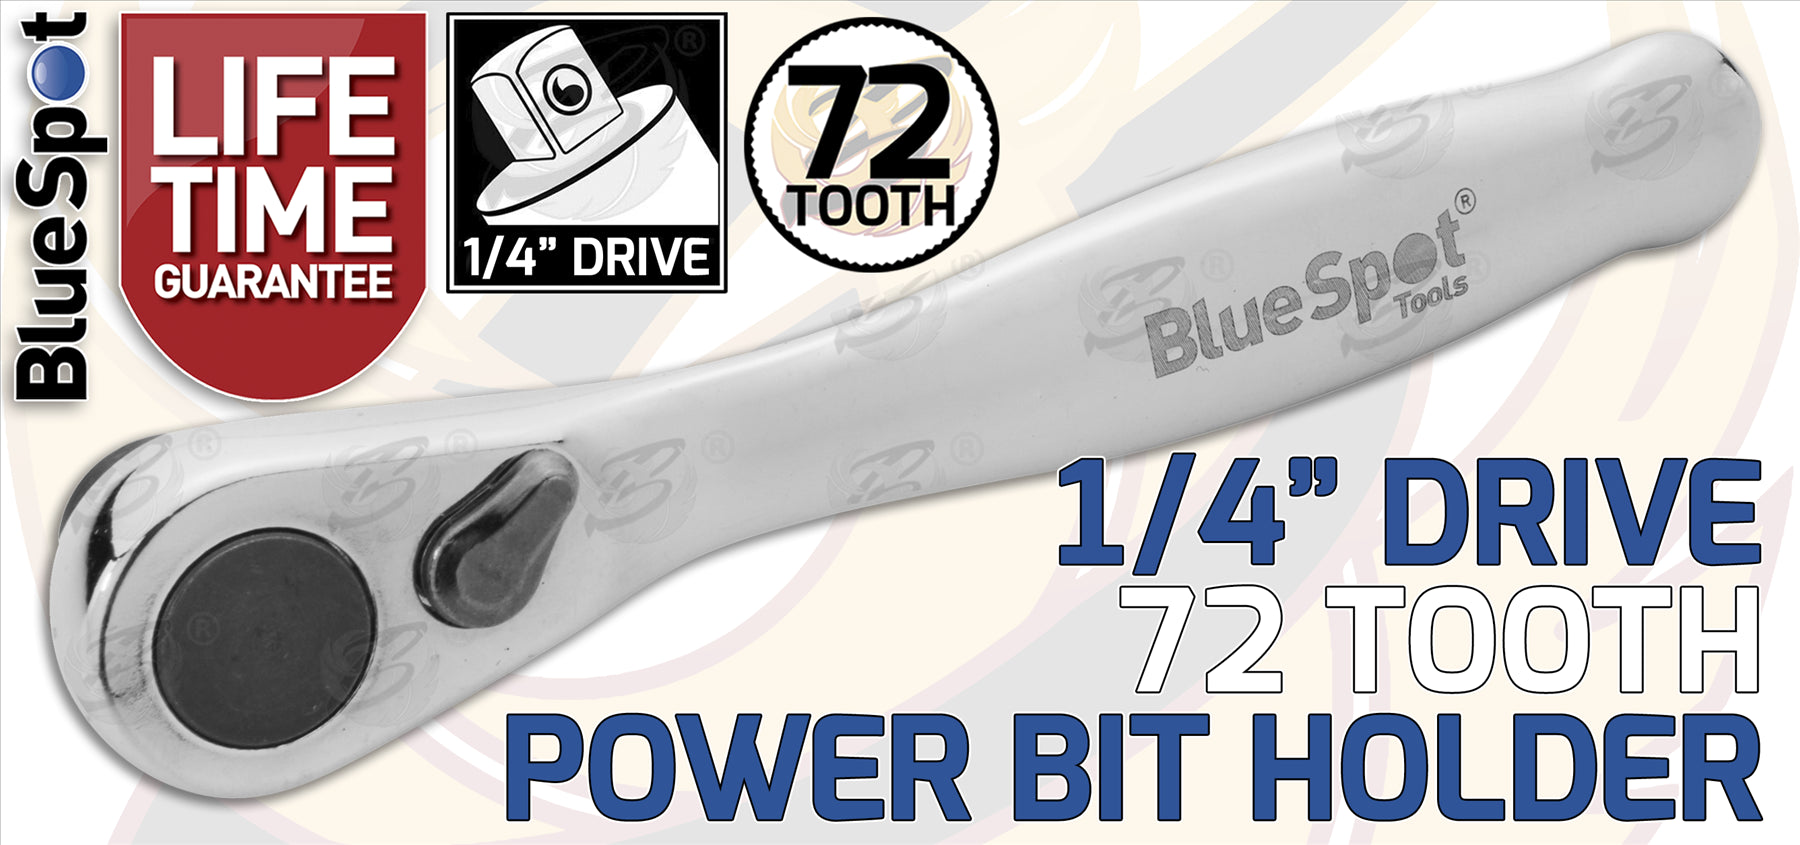 BLUESPOT MINI 1/4" DRIVE 72 TOOTH POWER BIT HOLDER ( RATCHET HANDLE )